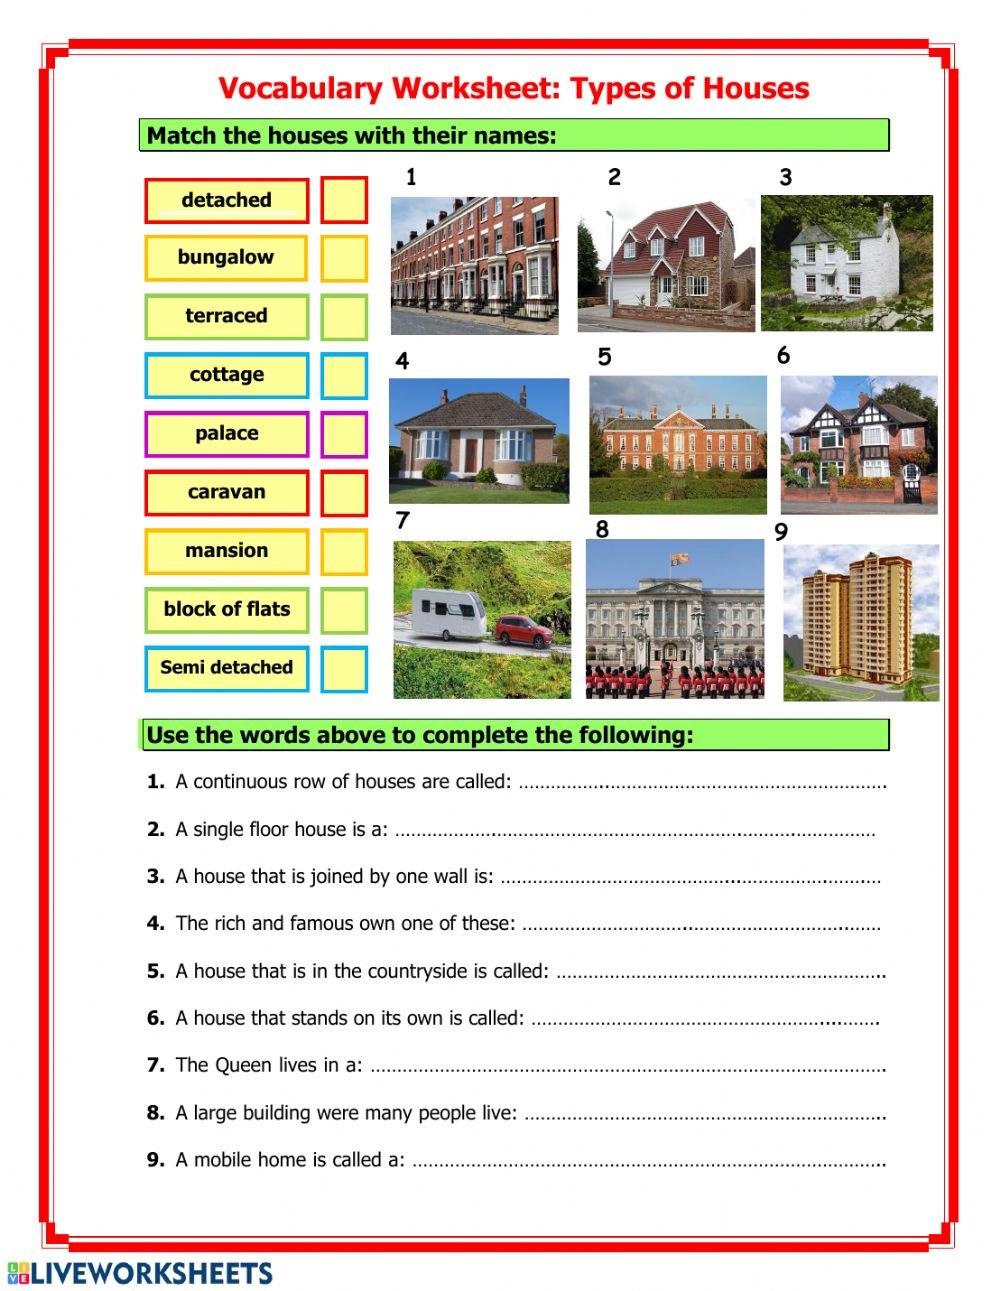 Kinds of housing. Types of Houses задания. Виды домов на английском. Виды домов в английском языке. Гдз английский Worksheet Types of Houses.